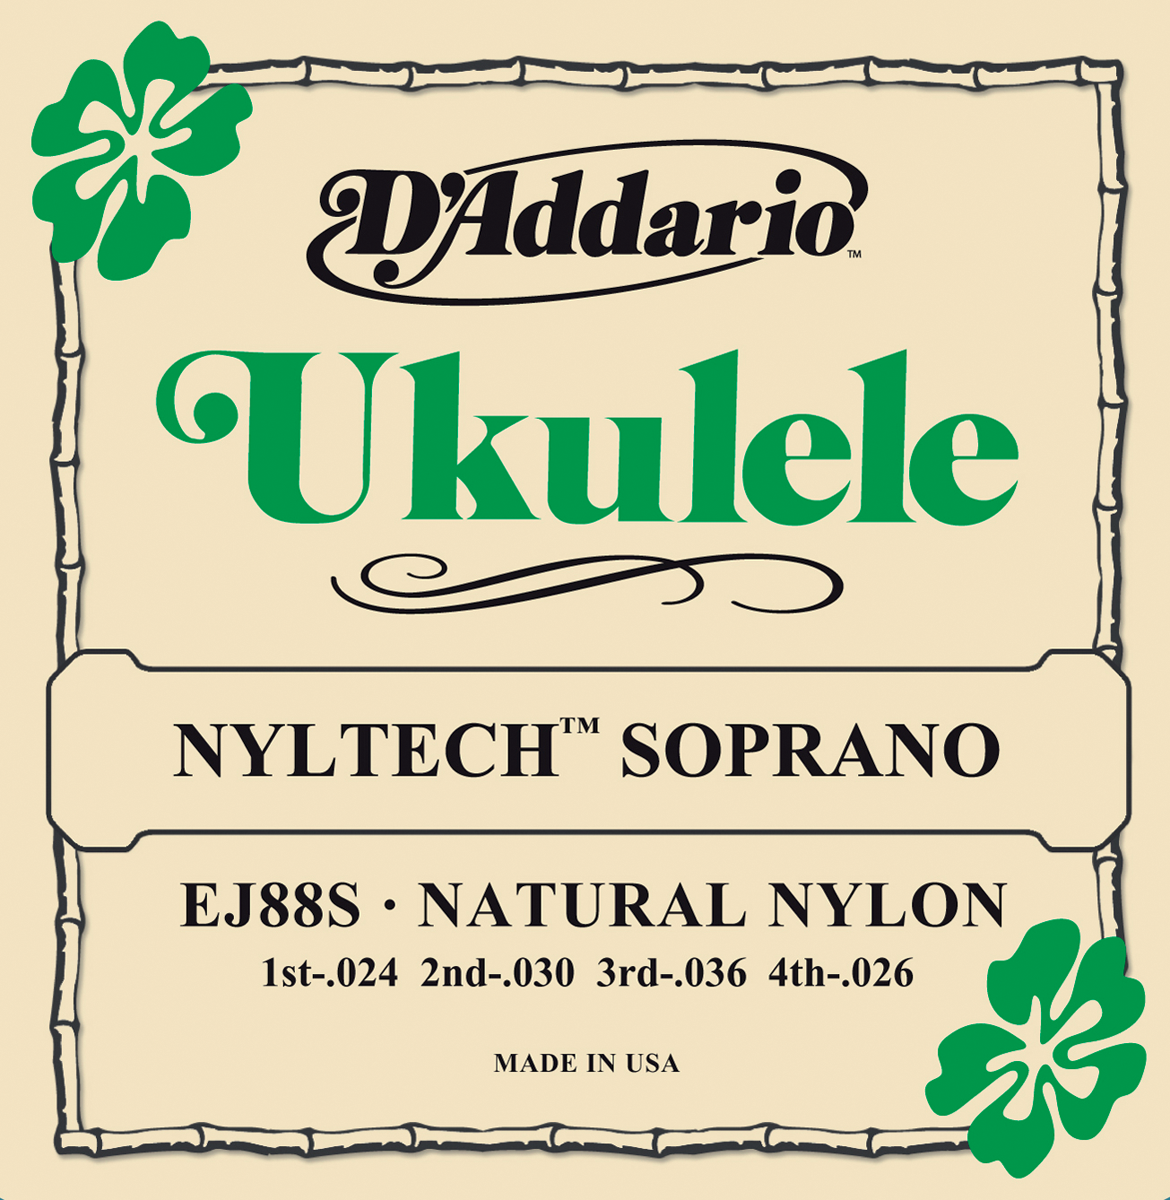 D'addario Ukulele Soprano Nyltech 024.026 Ej88s - Ukulelesnaren - Variation 1